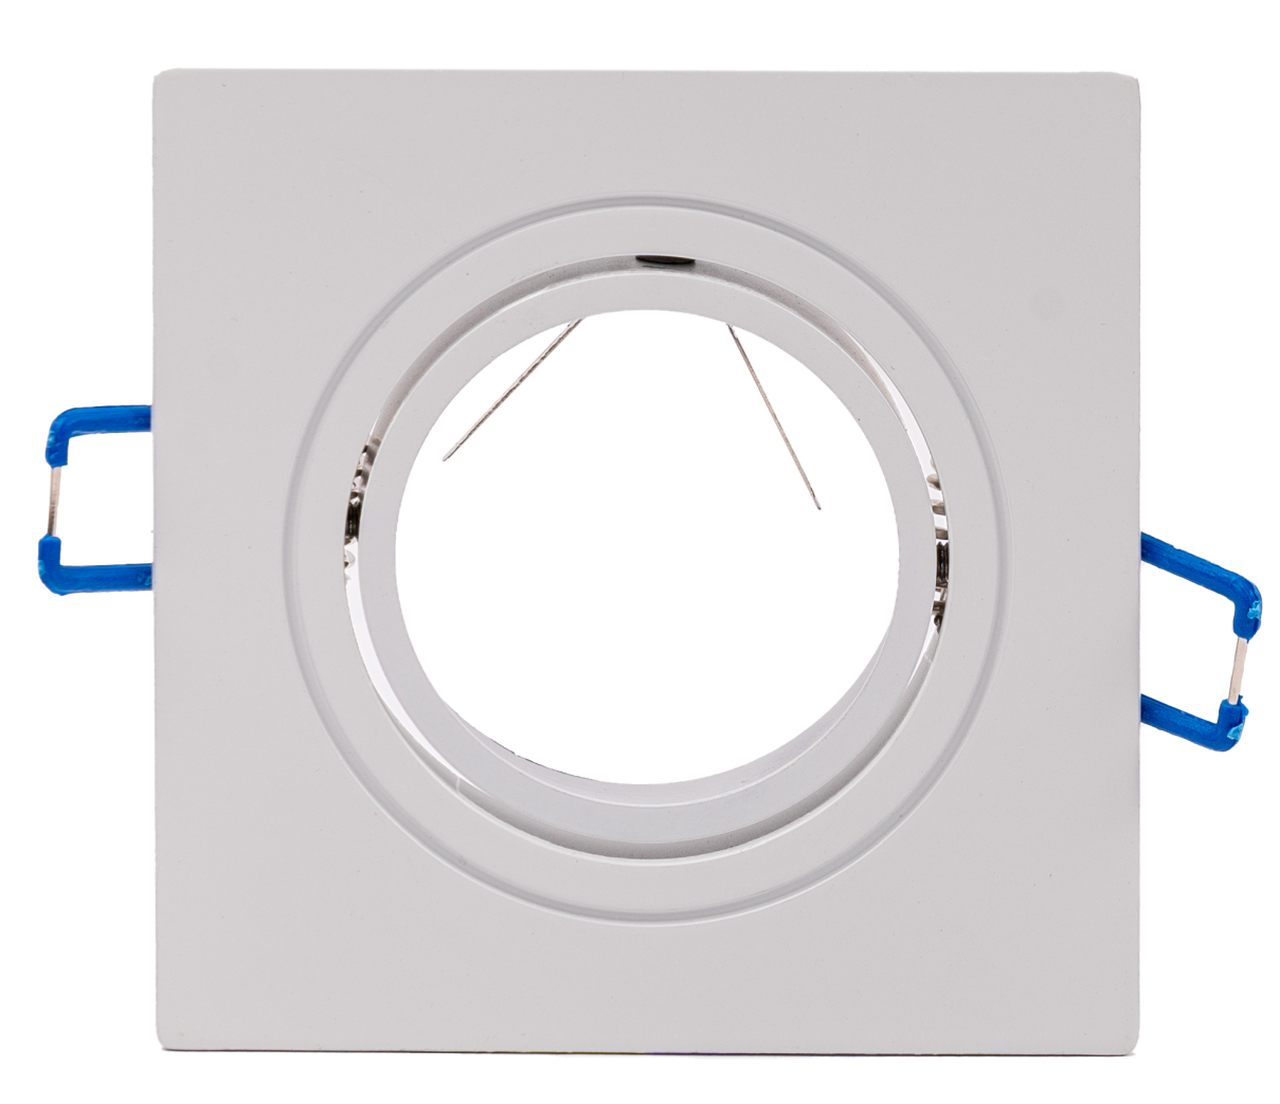 LED Solution Biely podhľadový rámček hranatý výklopný 101176